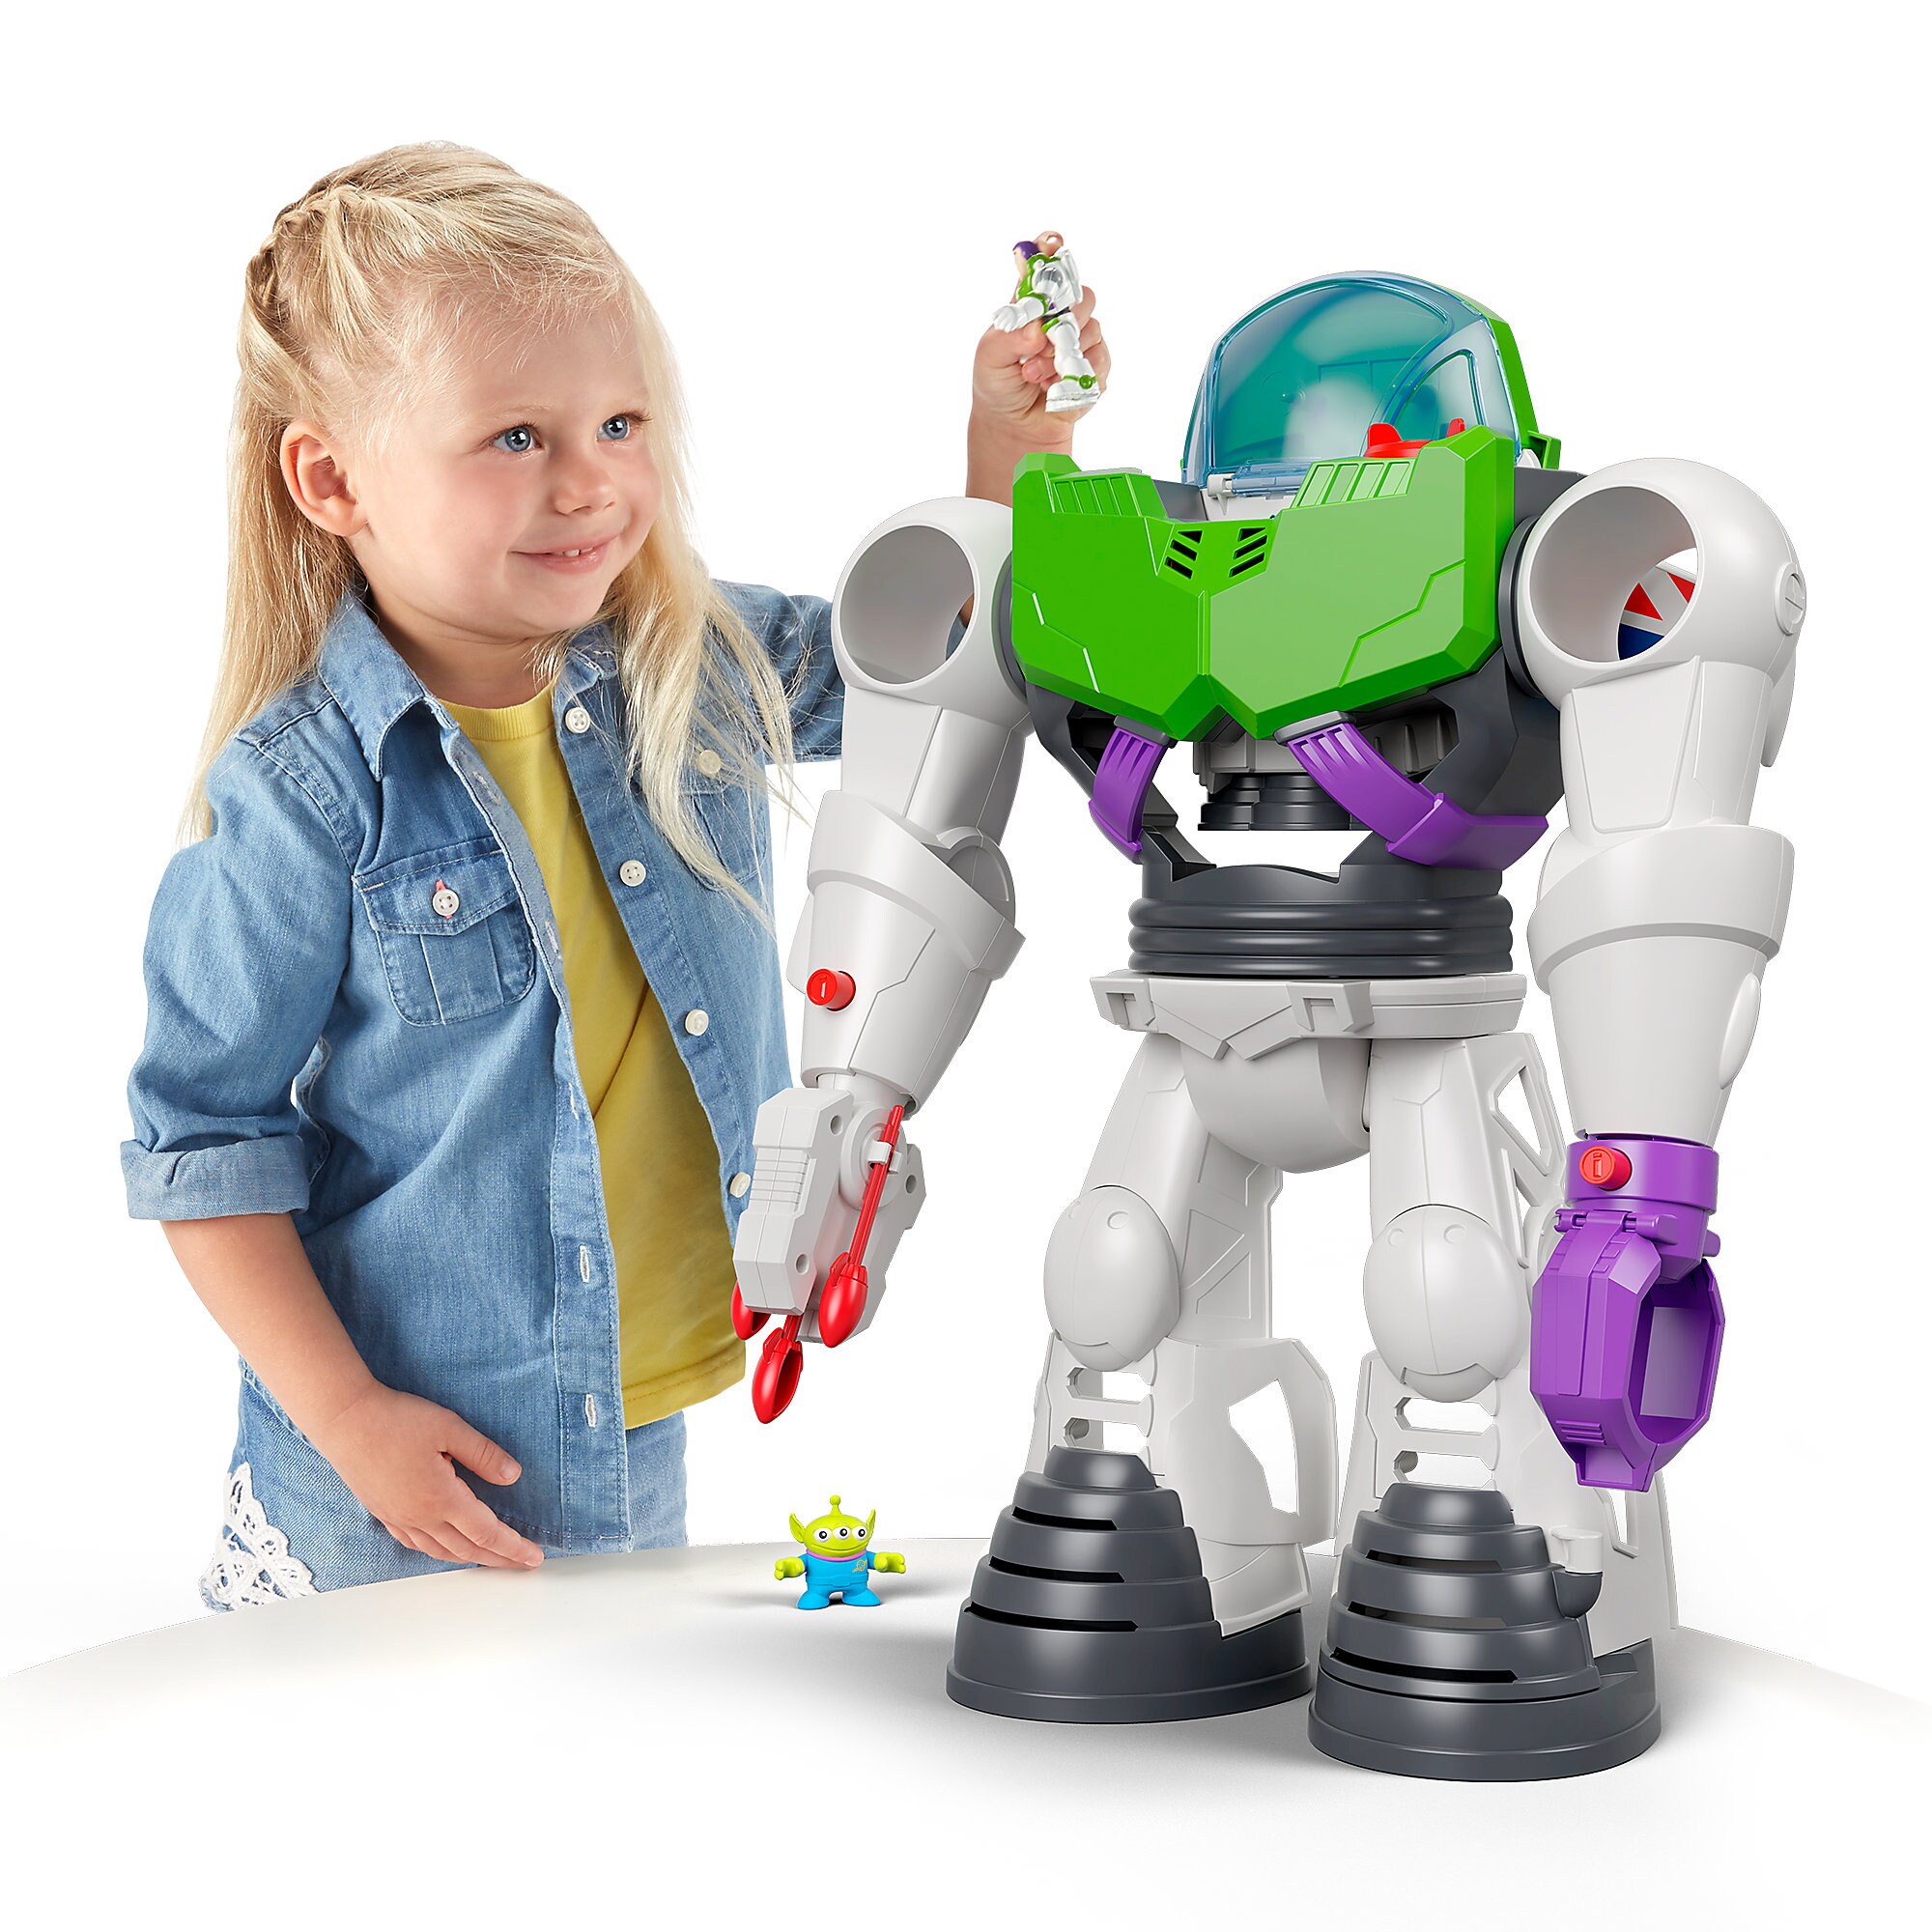 Buzz Lightyear Robot - Toy Story 4